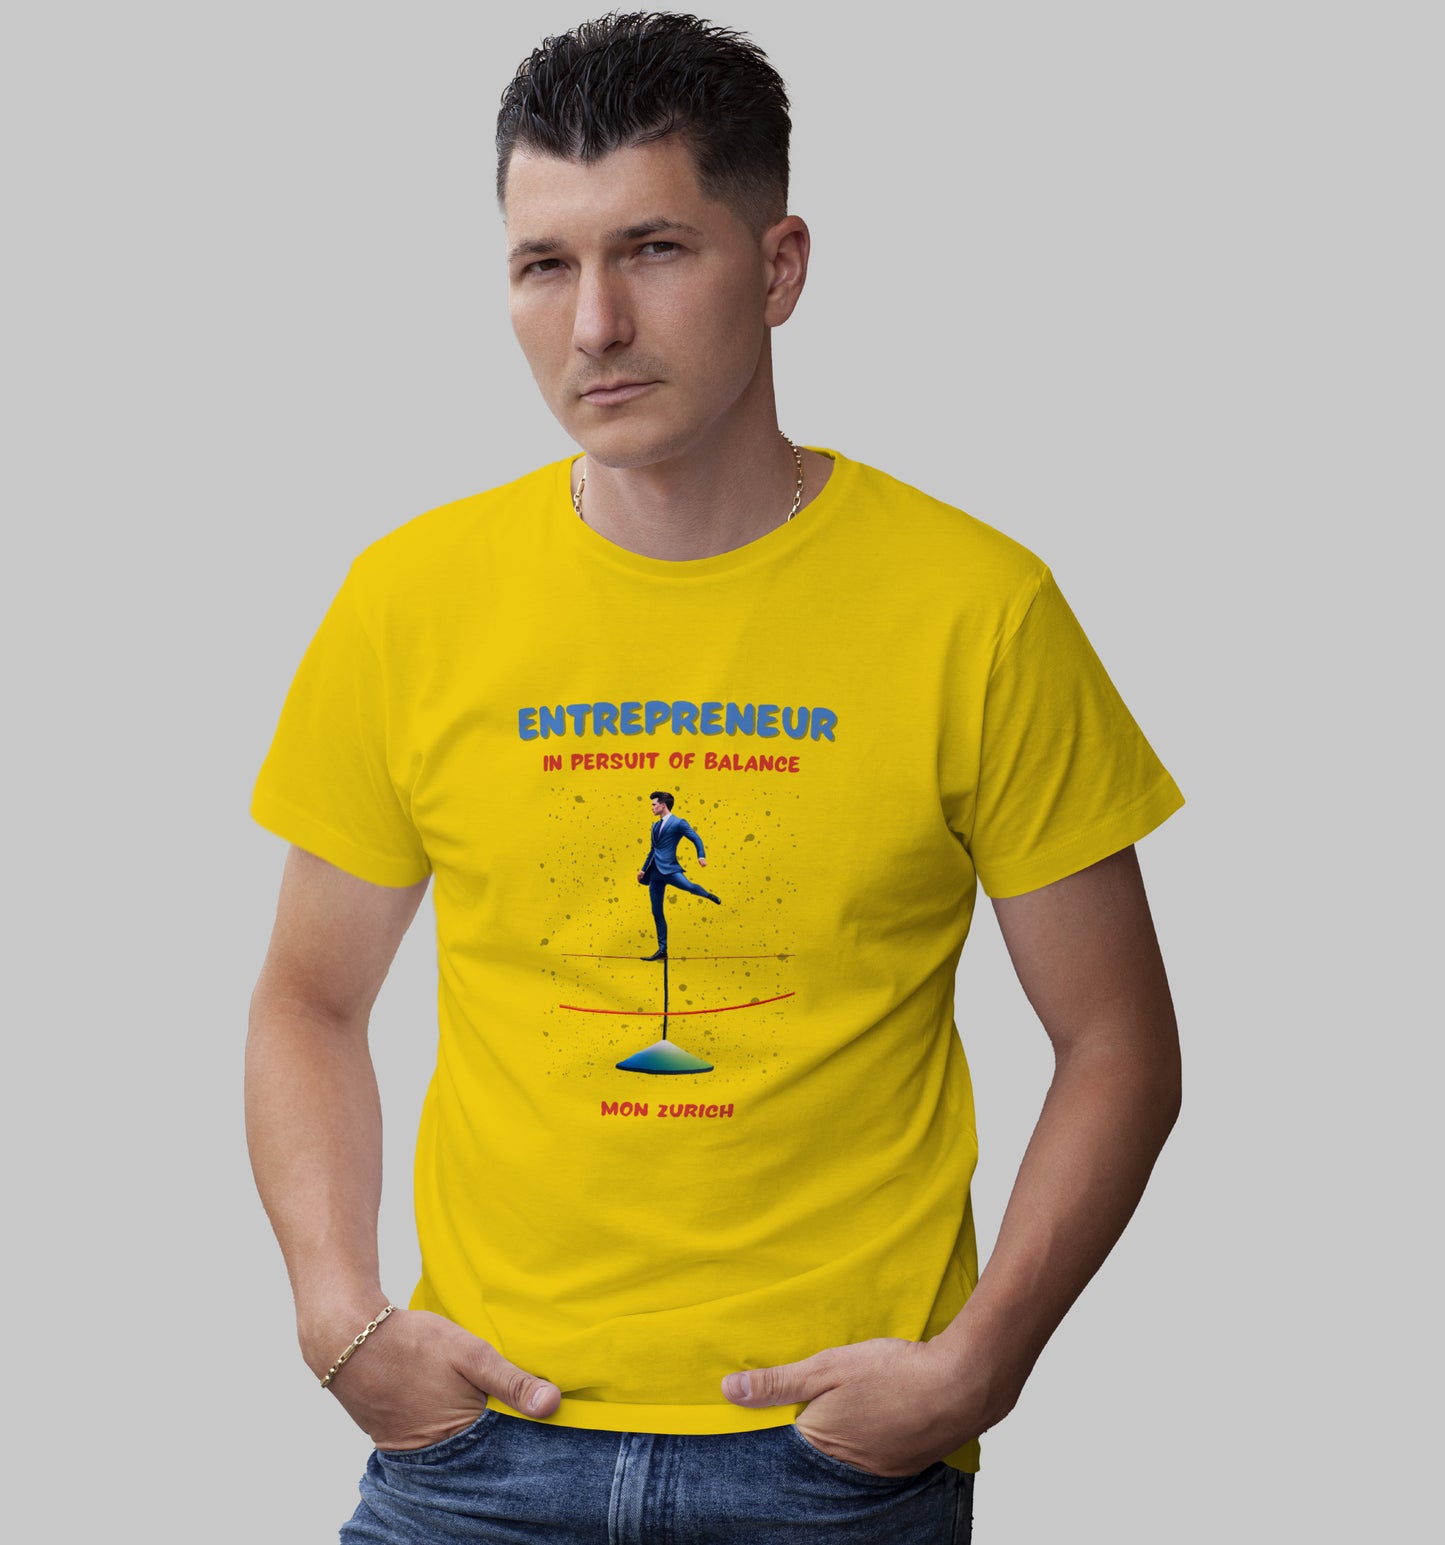 Entrepreneur - In Pursuit Of Balance T-Shirt In Light - Mon Zurich Originals